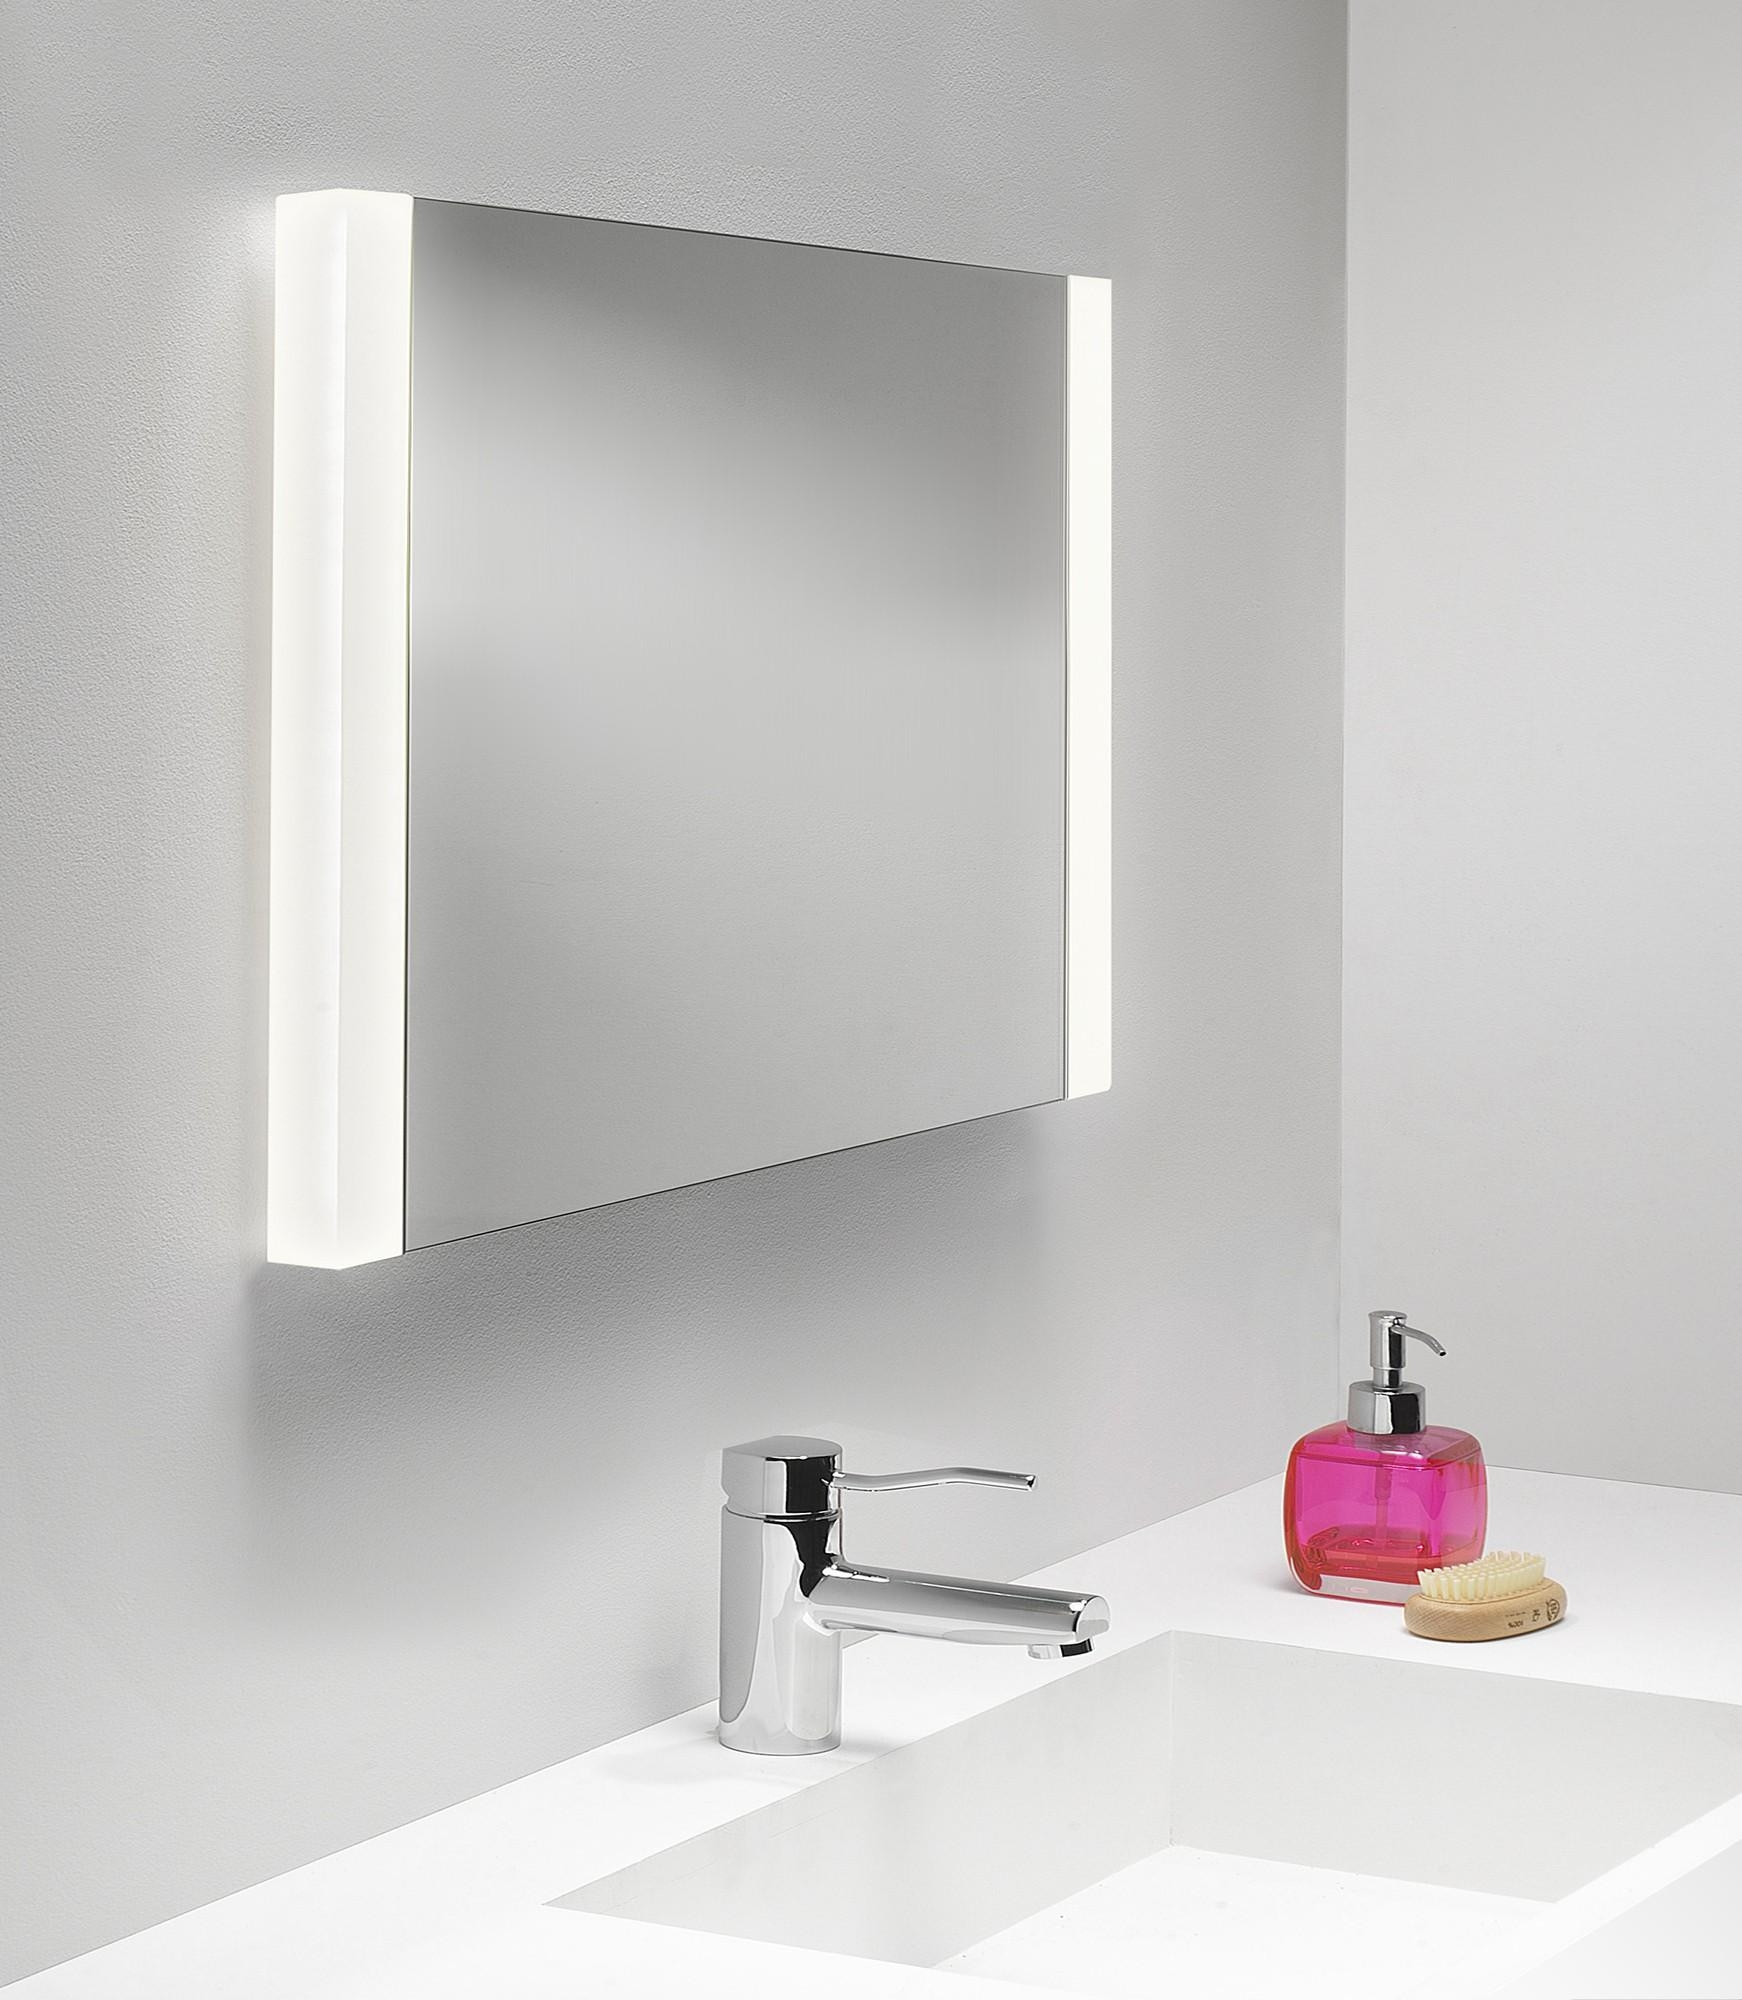 Lighting Bathroom Mirrors
 Free Standing Bathroom Mirrors